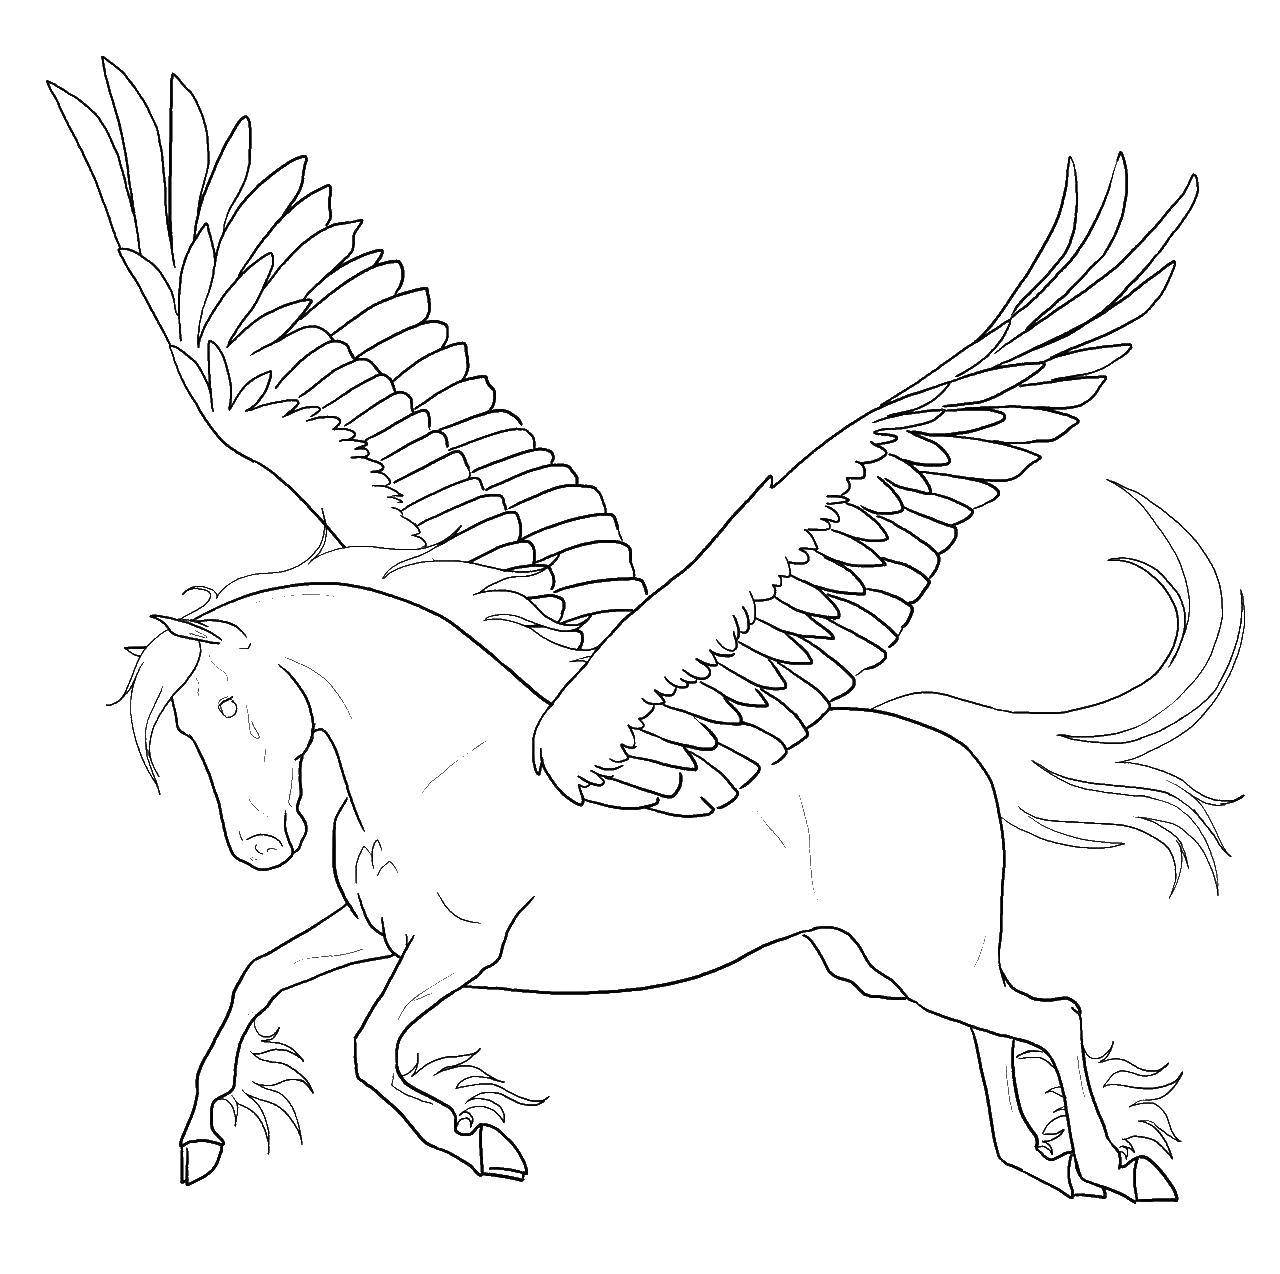 Coloring Flying Pegasus. Category coloring. Tags:  Animals, Pegasus.